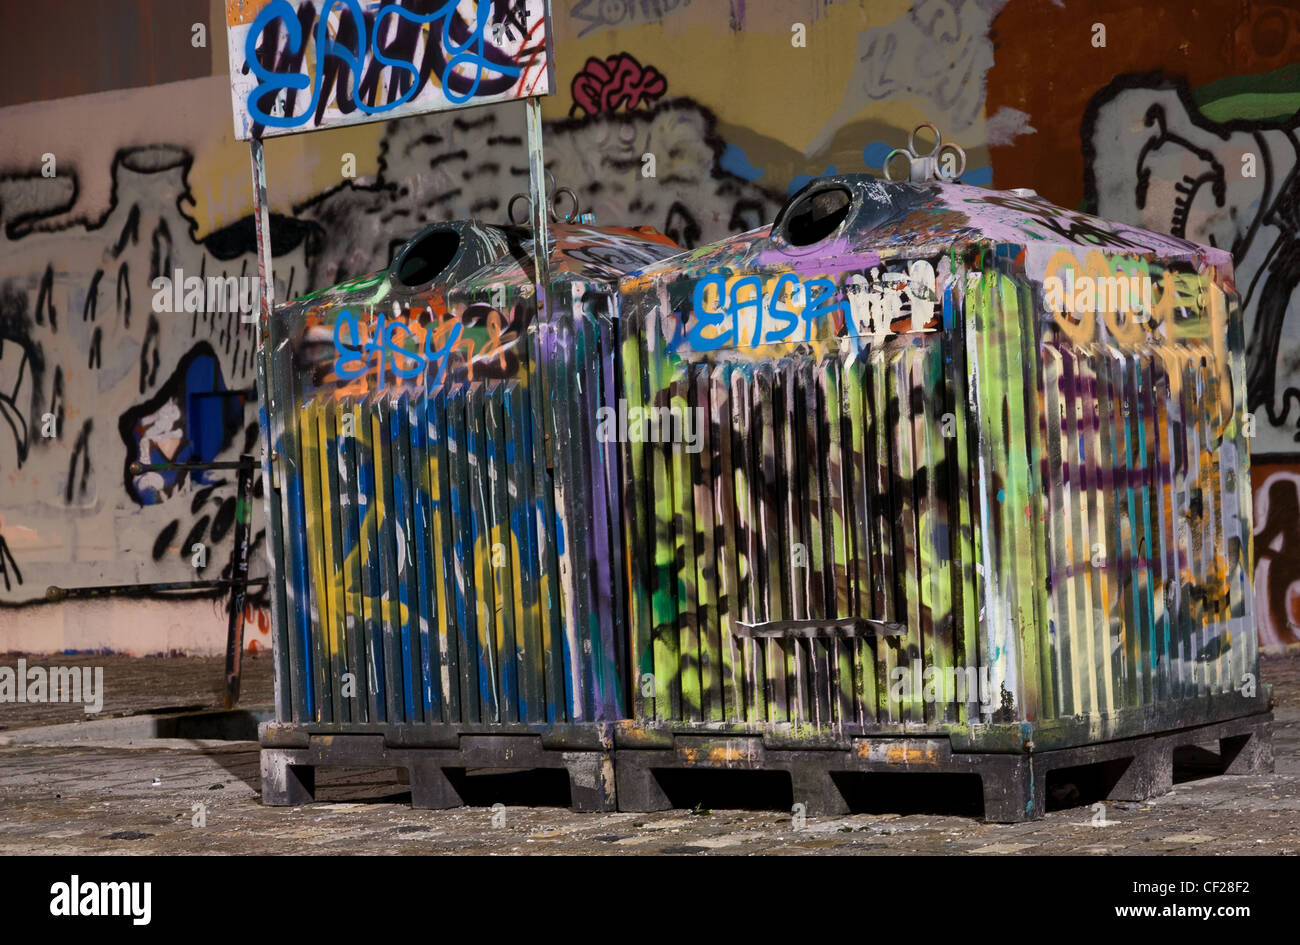 ArtCreativity Large Trash Cans Set with Lids, Set of 4, Garbage Bin To ·  Art Creativity